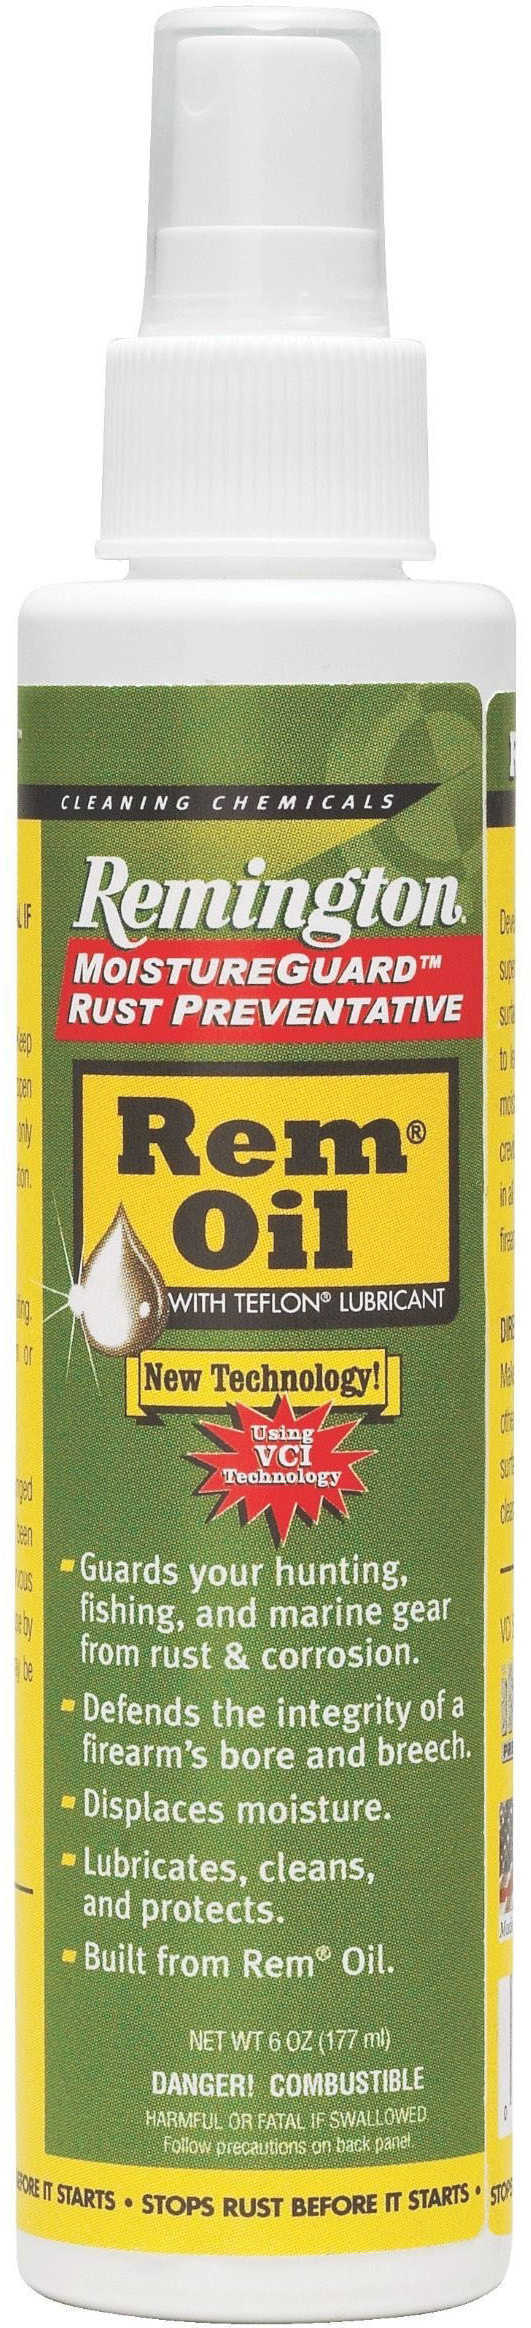 Remington Moistureguard Oil 6 Oz - Uses Volatile Corrosion Inhibitor Technology Lubricates & protects Metal